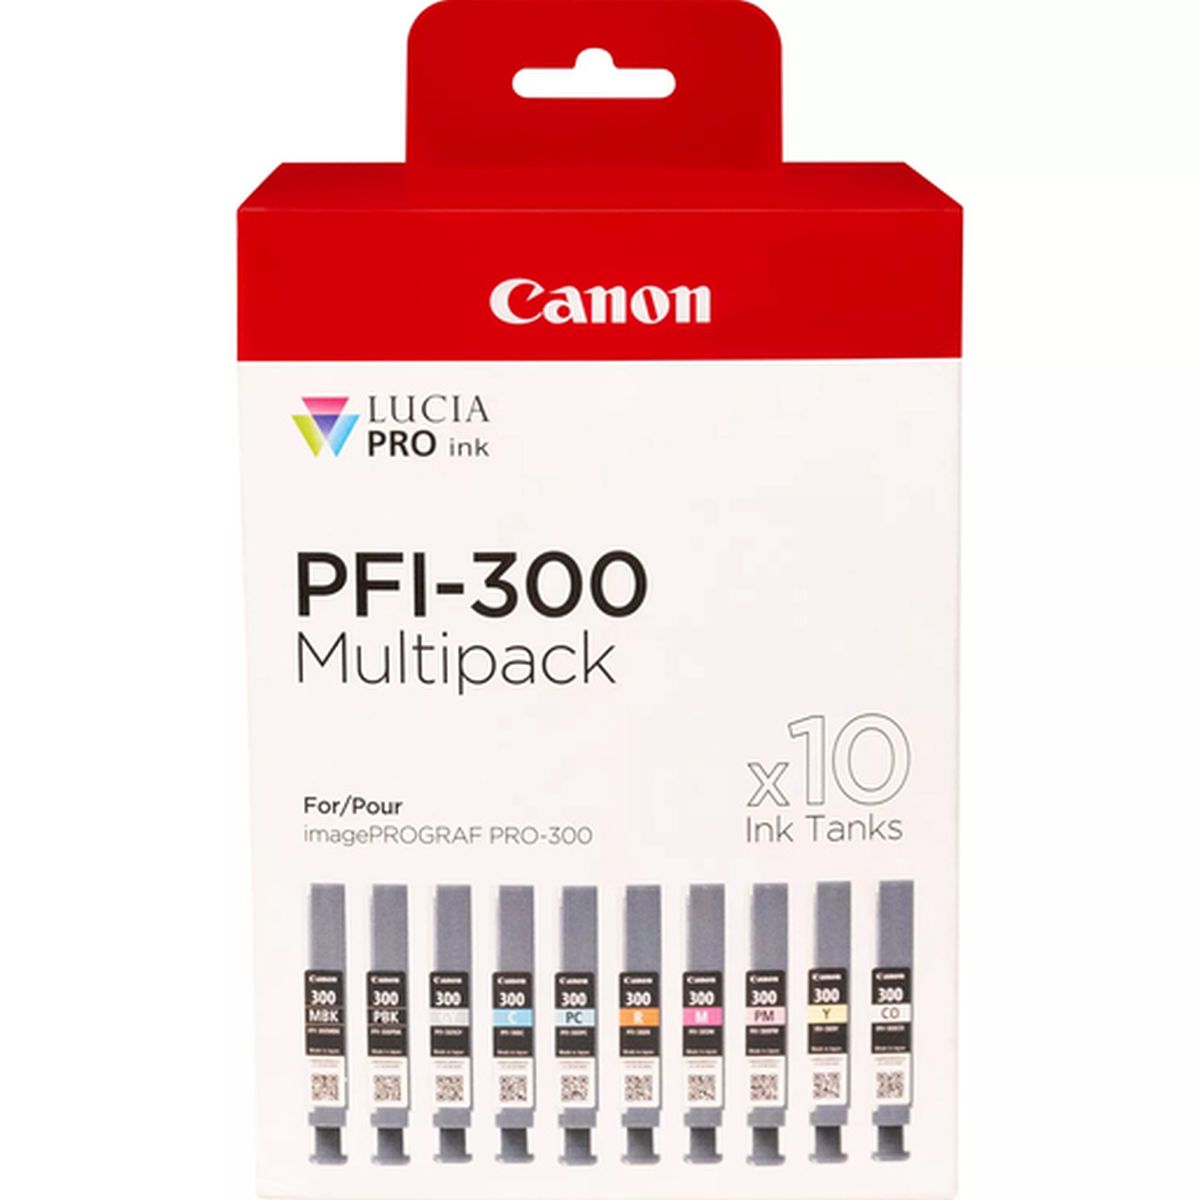 Canon PFI-300 Multipack Tinte für ImagePrograf PRO-300 